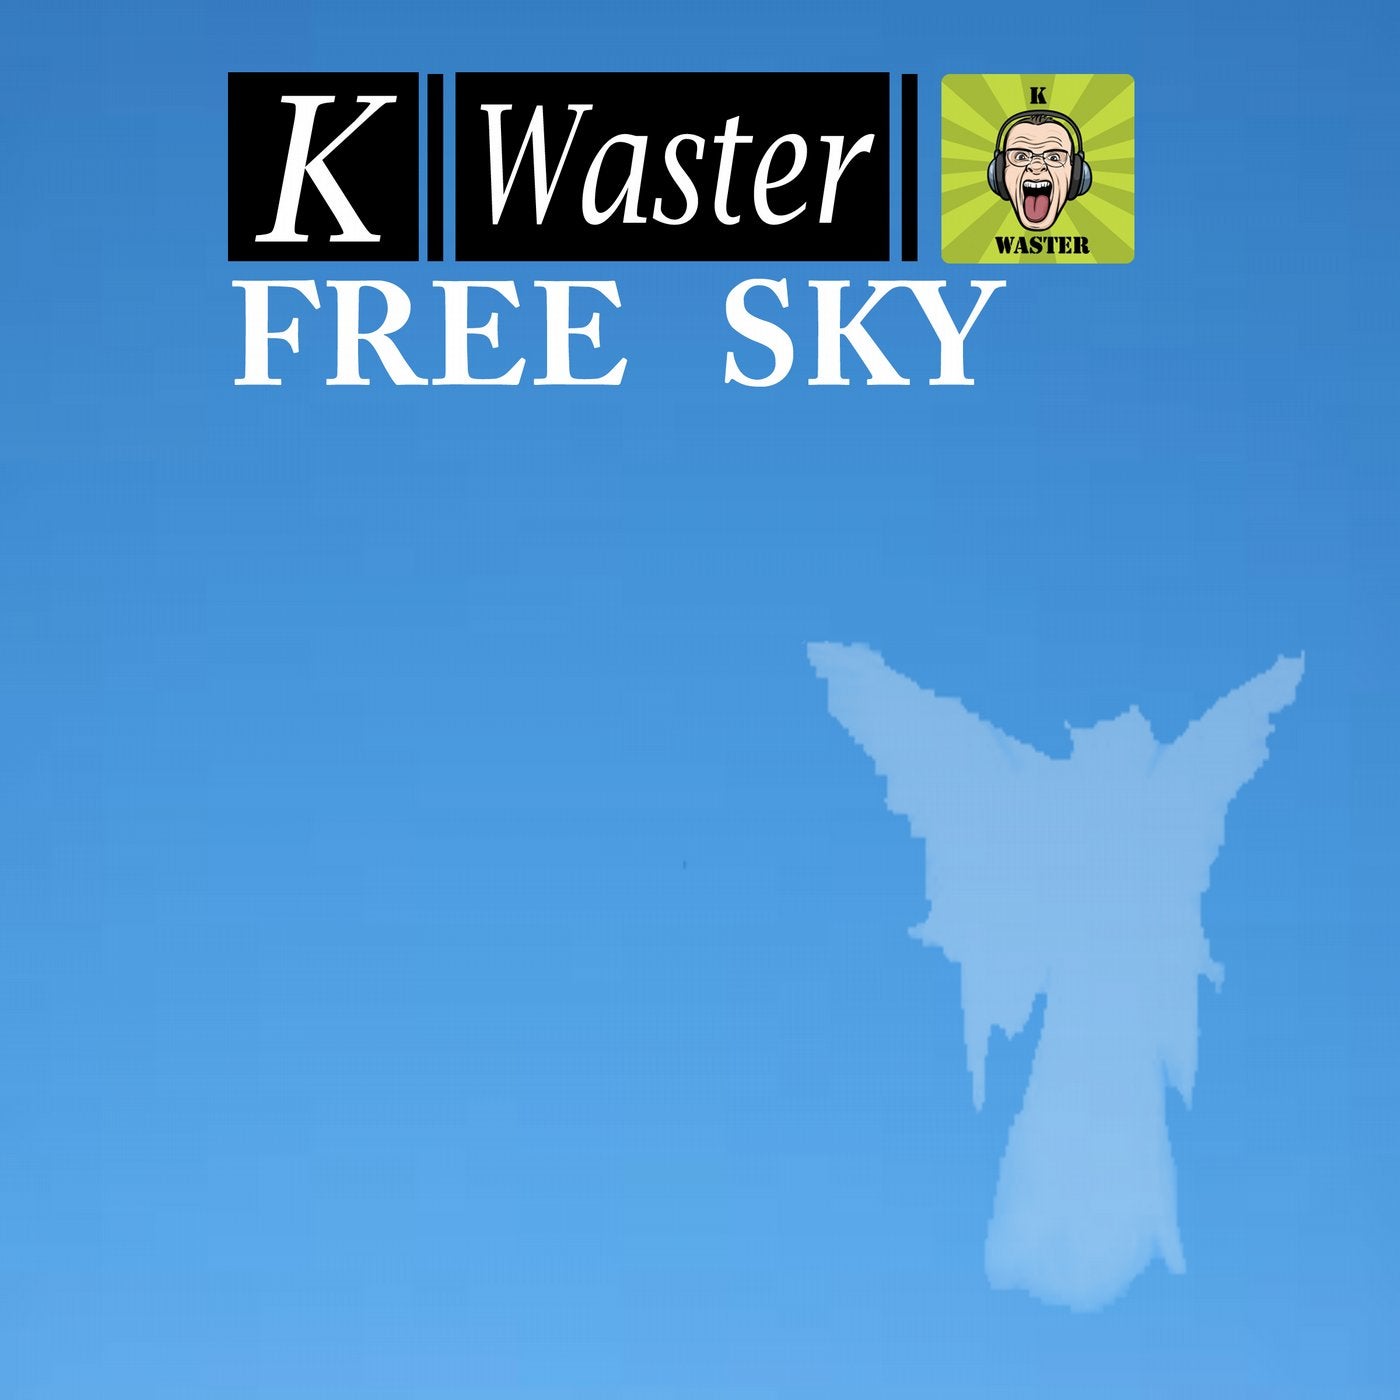 Free Sky